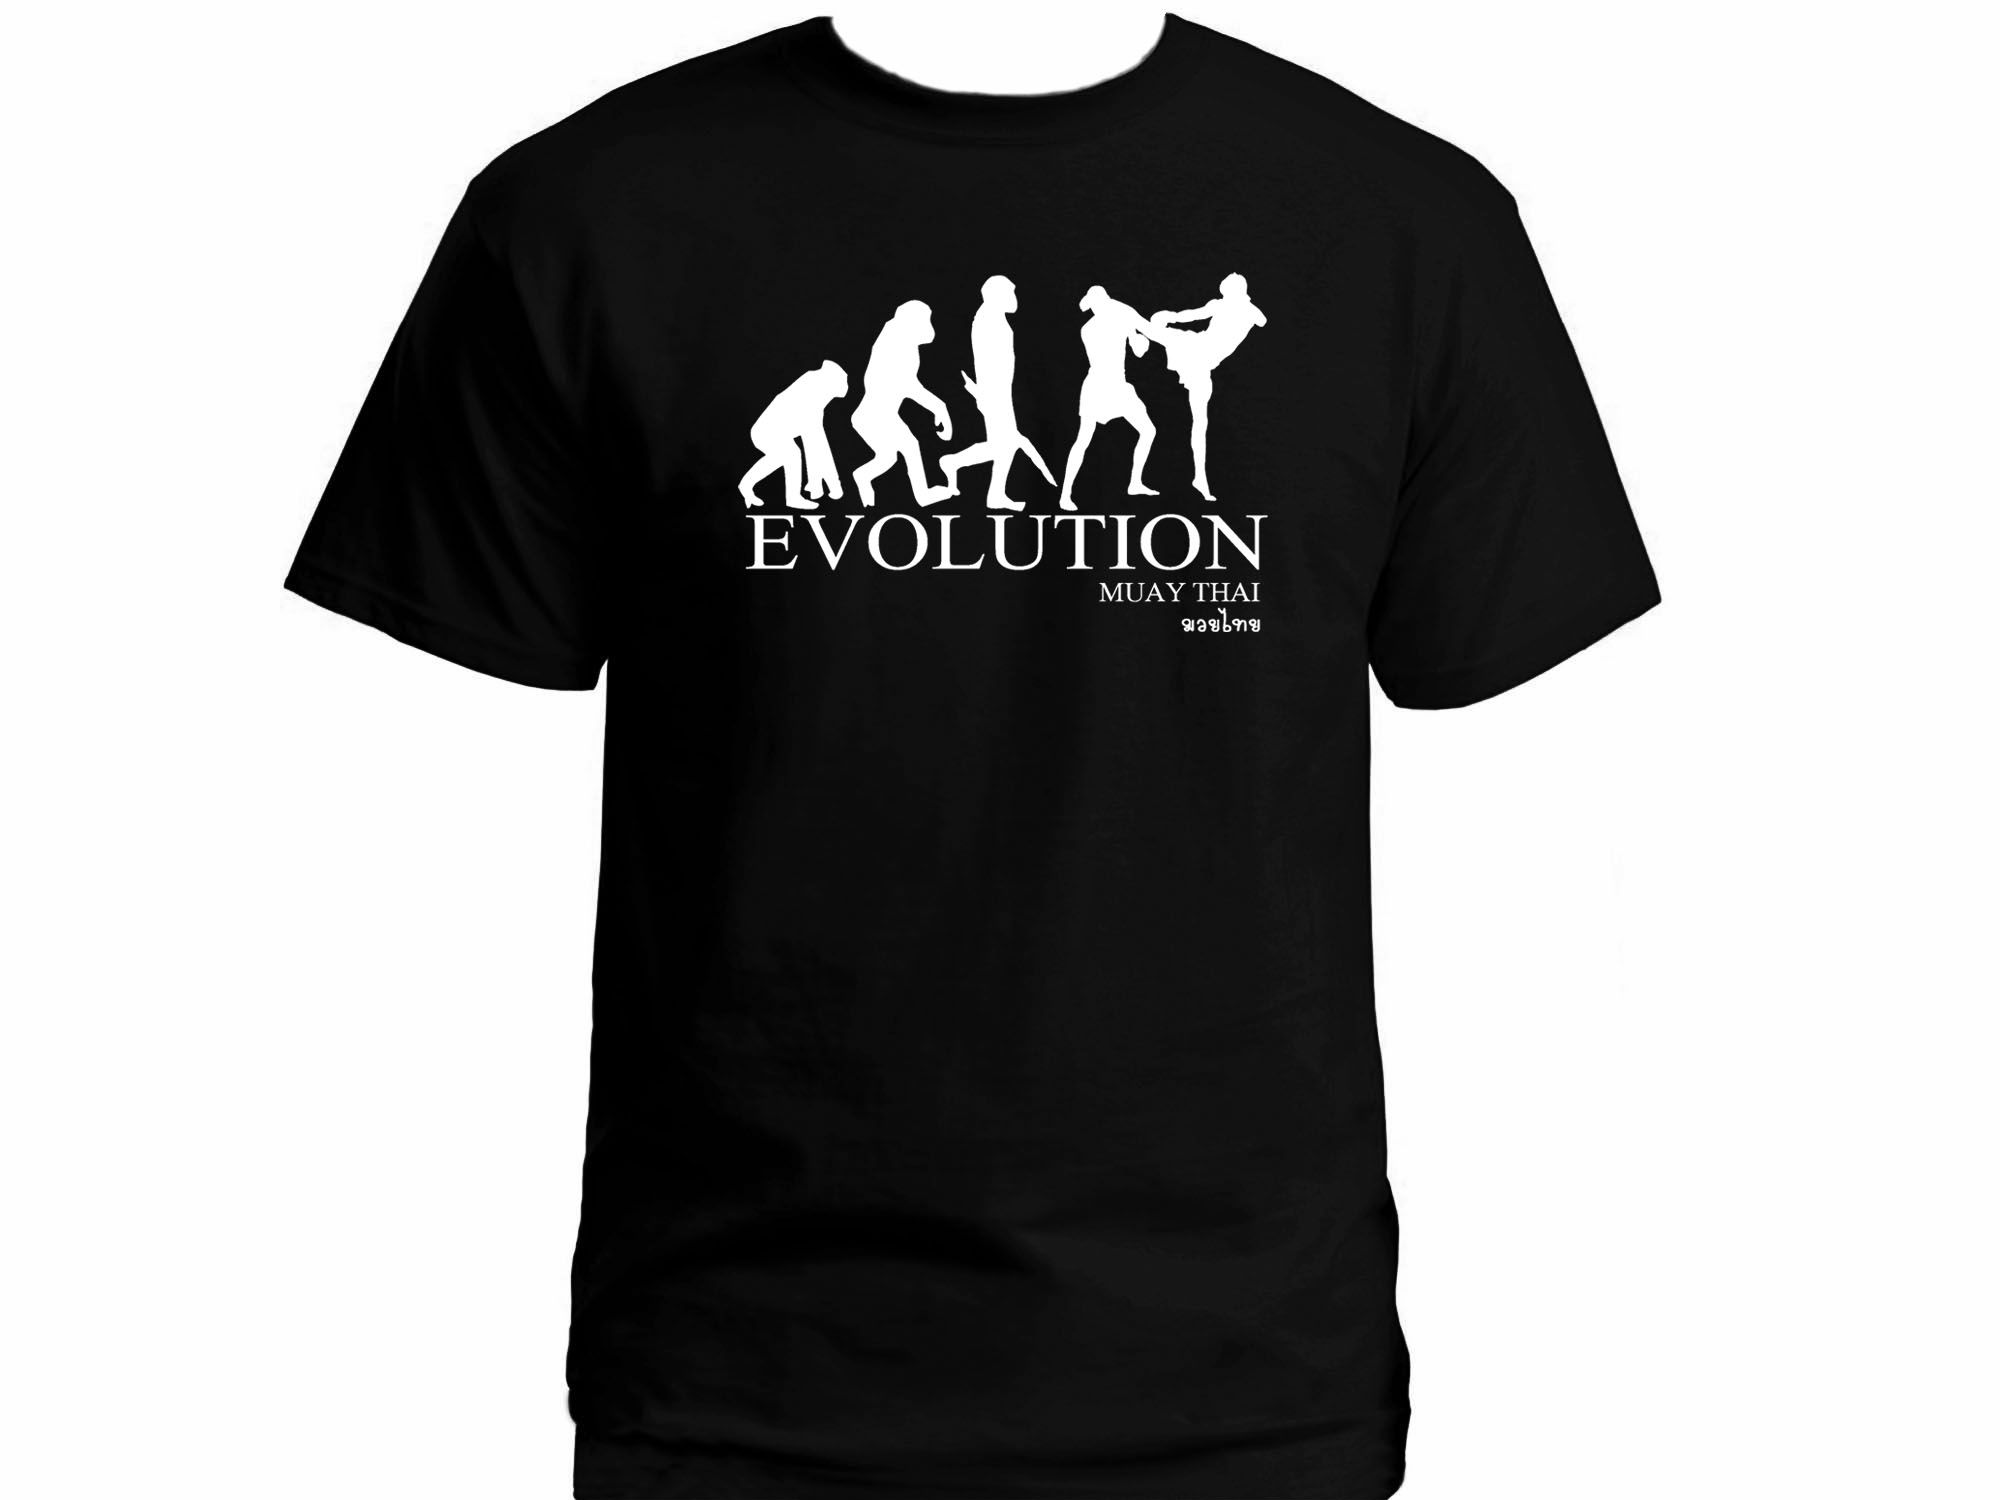 Muay Thai boxing Evolution graphic t-shirt